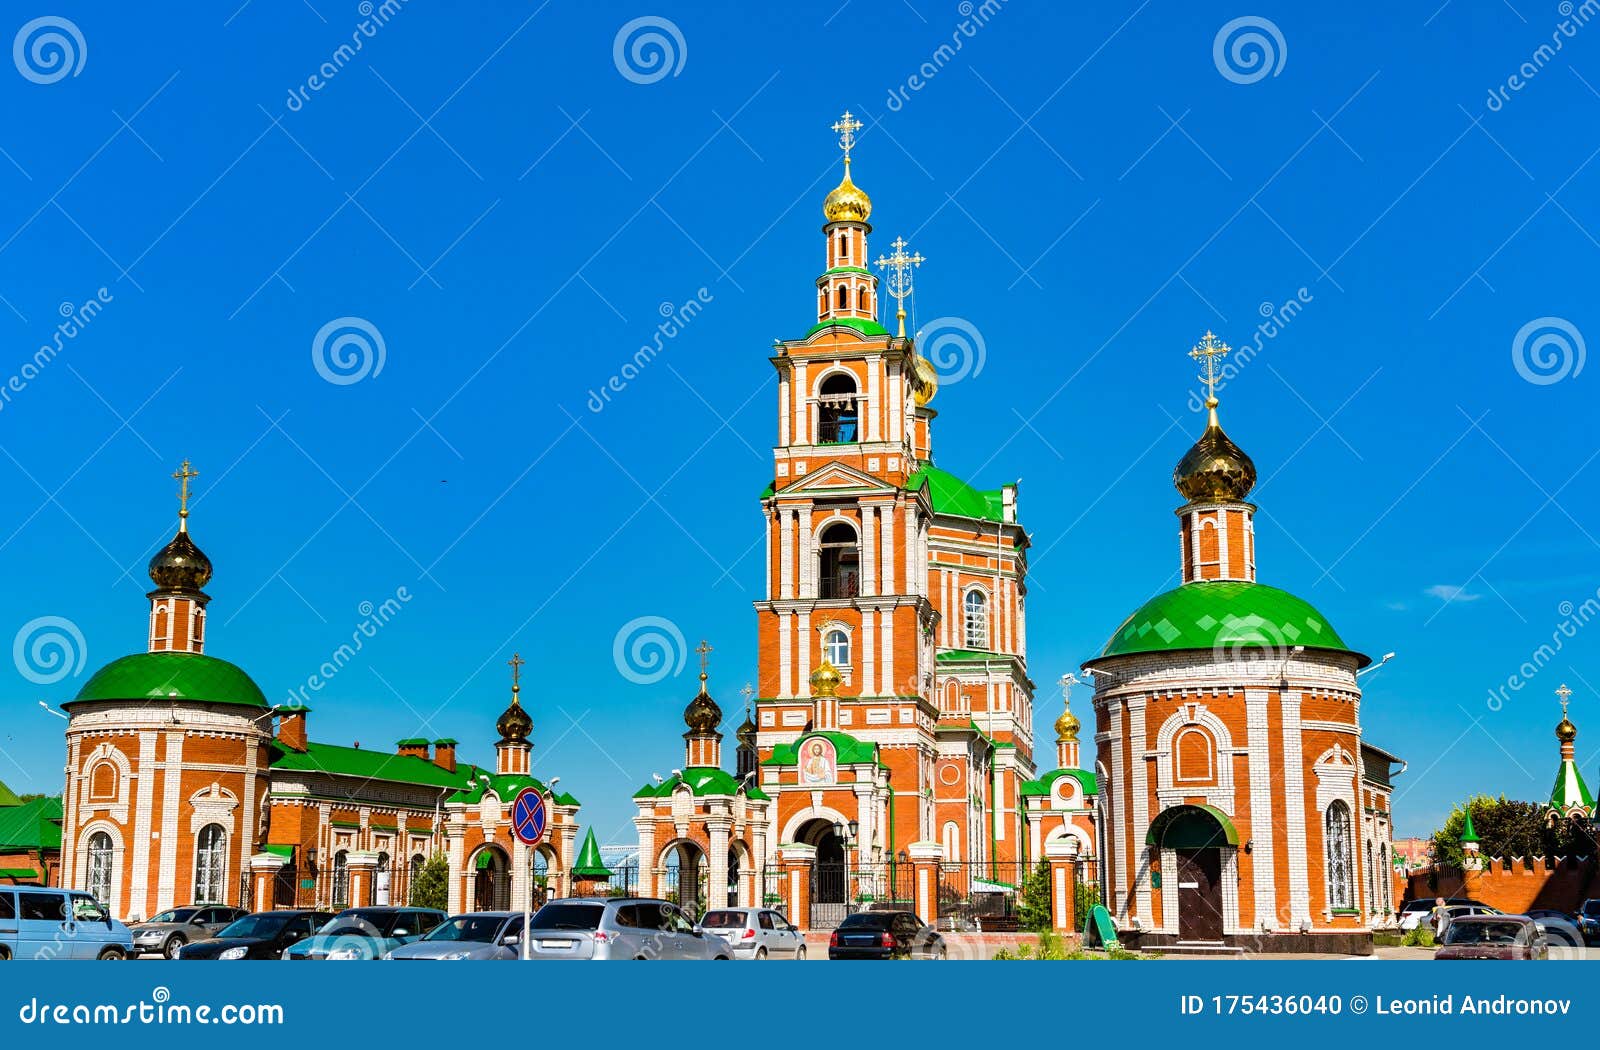 resurrection cathedral in yoshkar-ola, russia